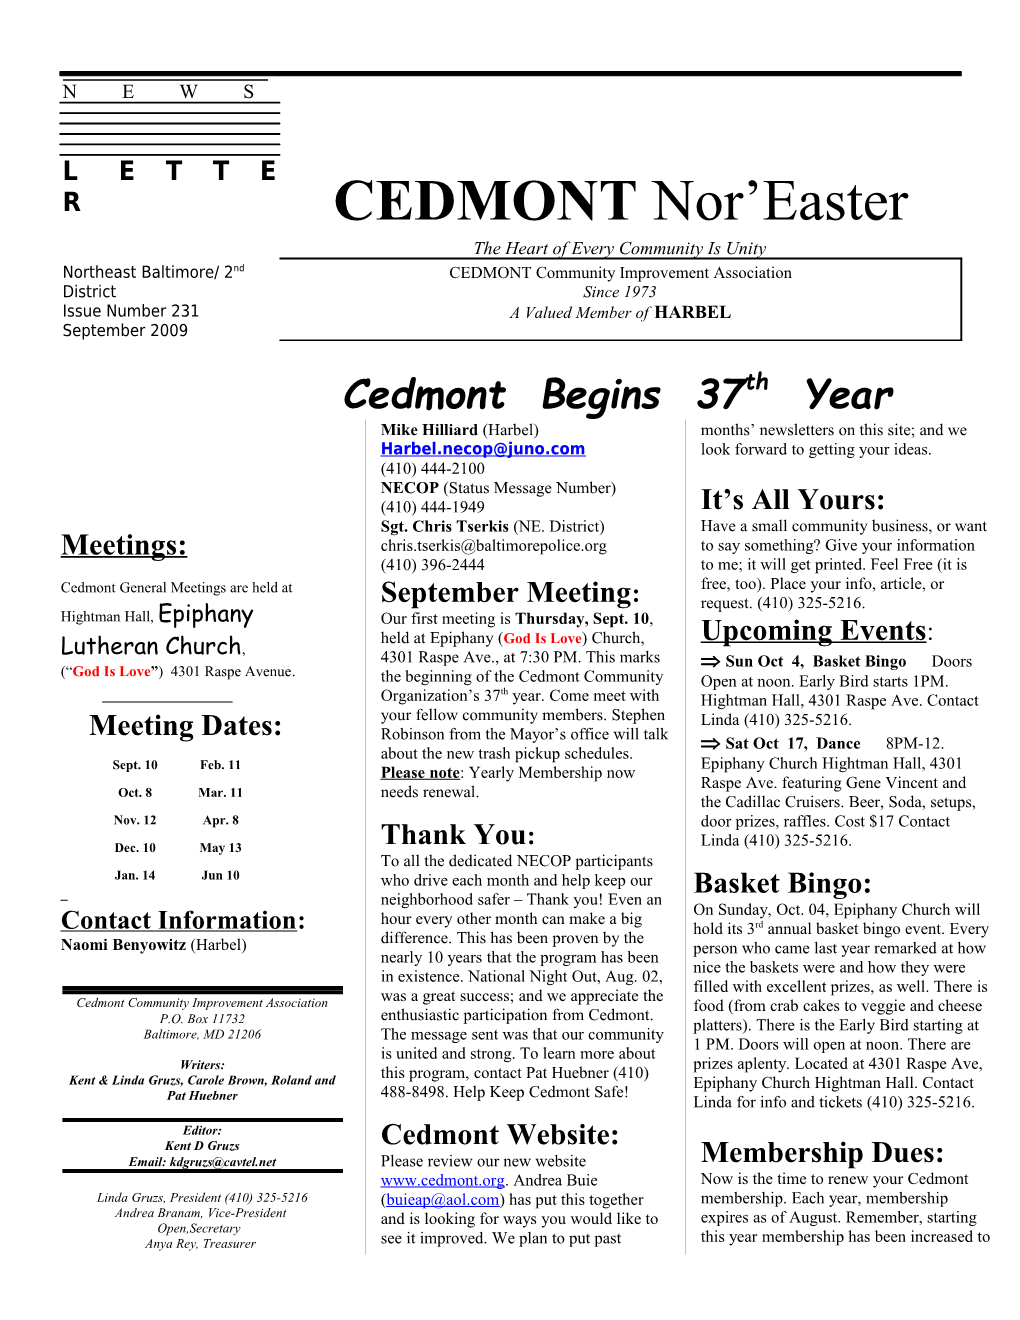 Cedmont Begins 37Th Year